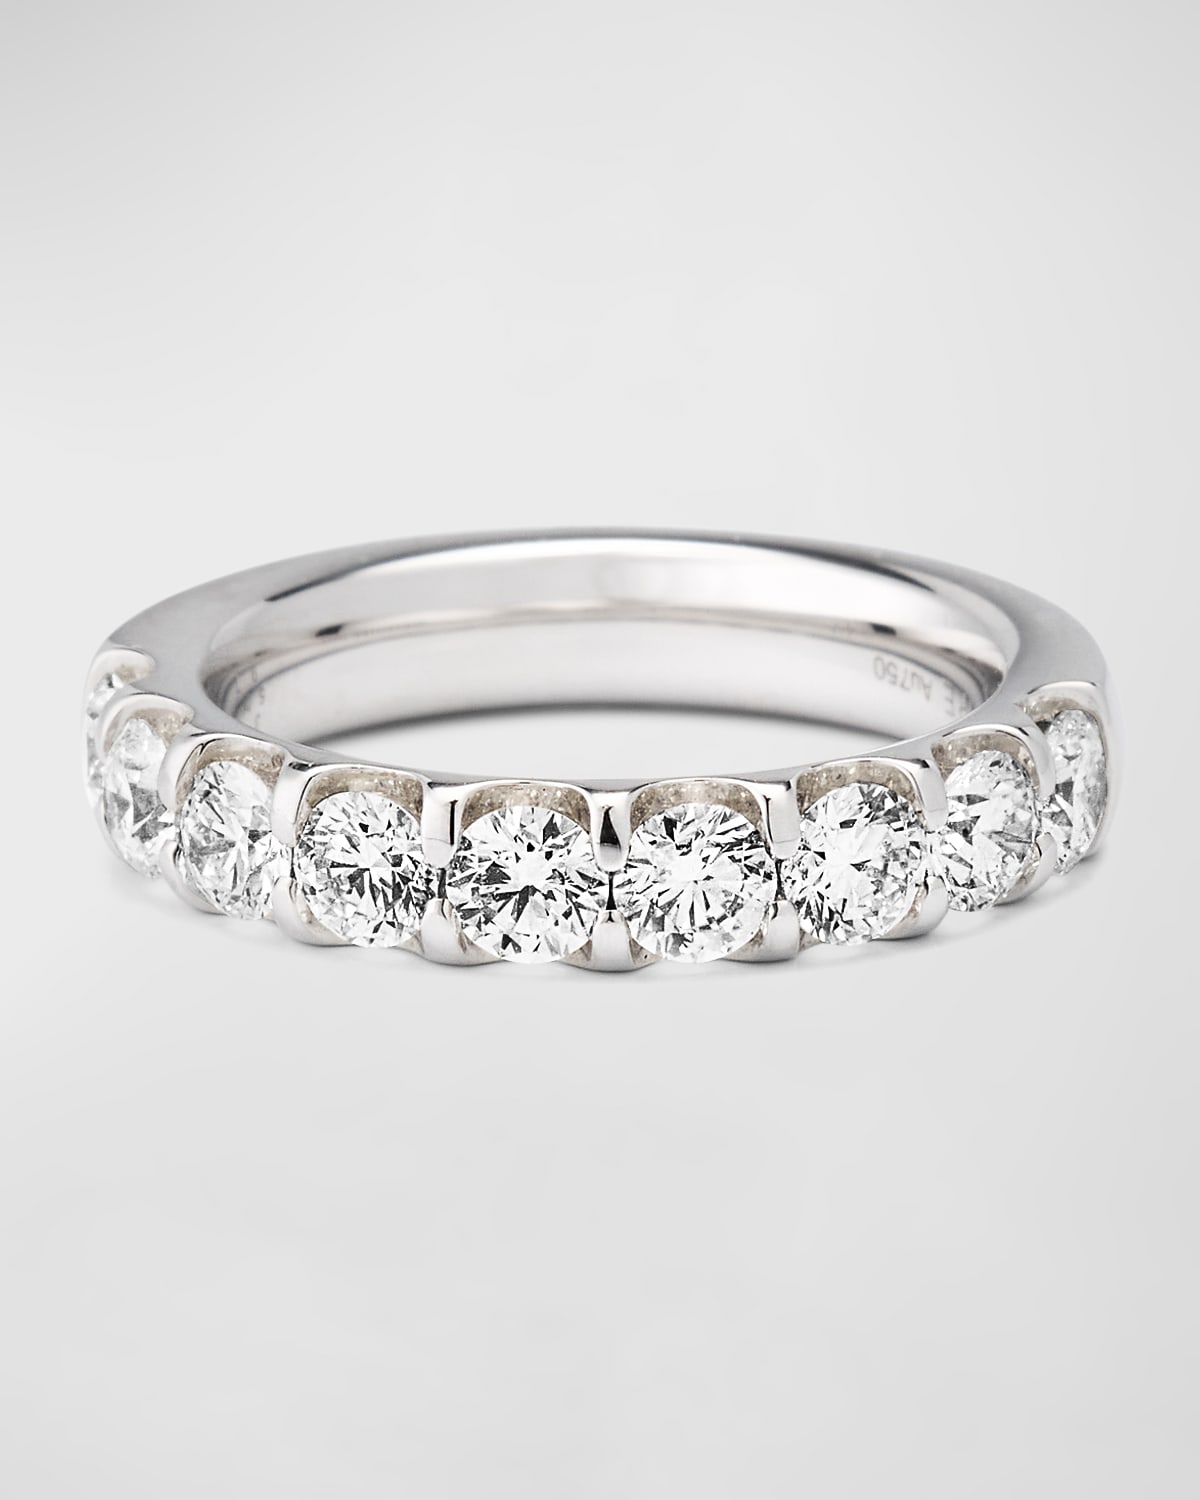 Memoire Diamond Band Ring in 18K White Gold, Size 6.5